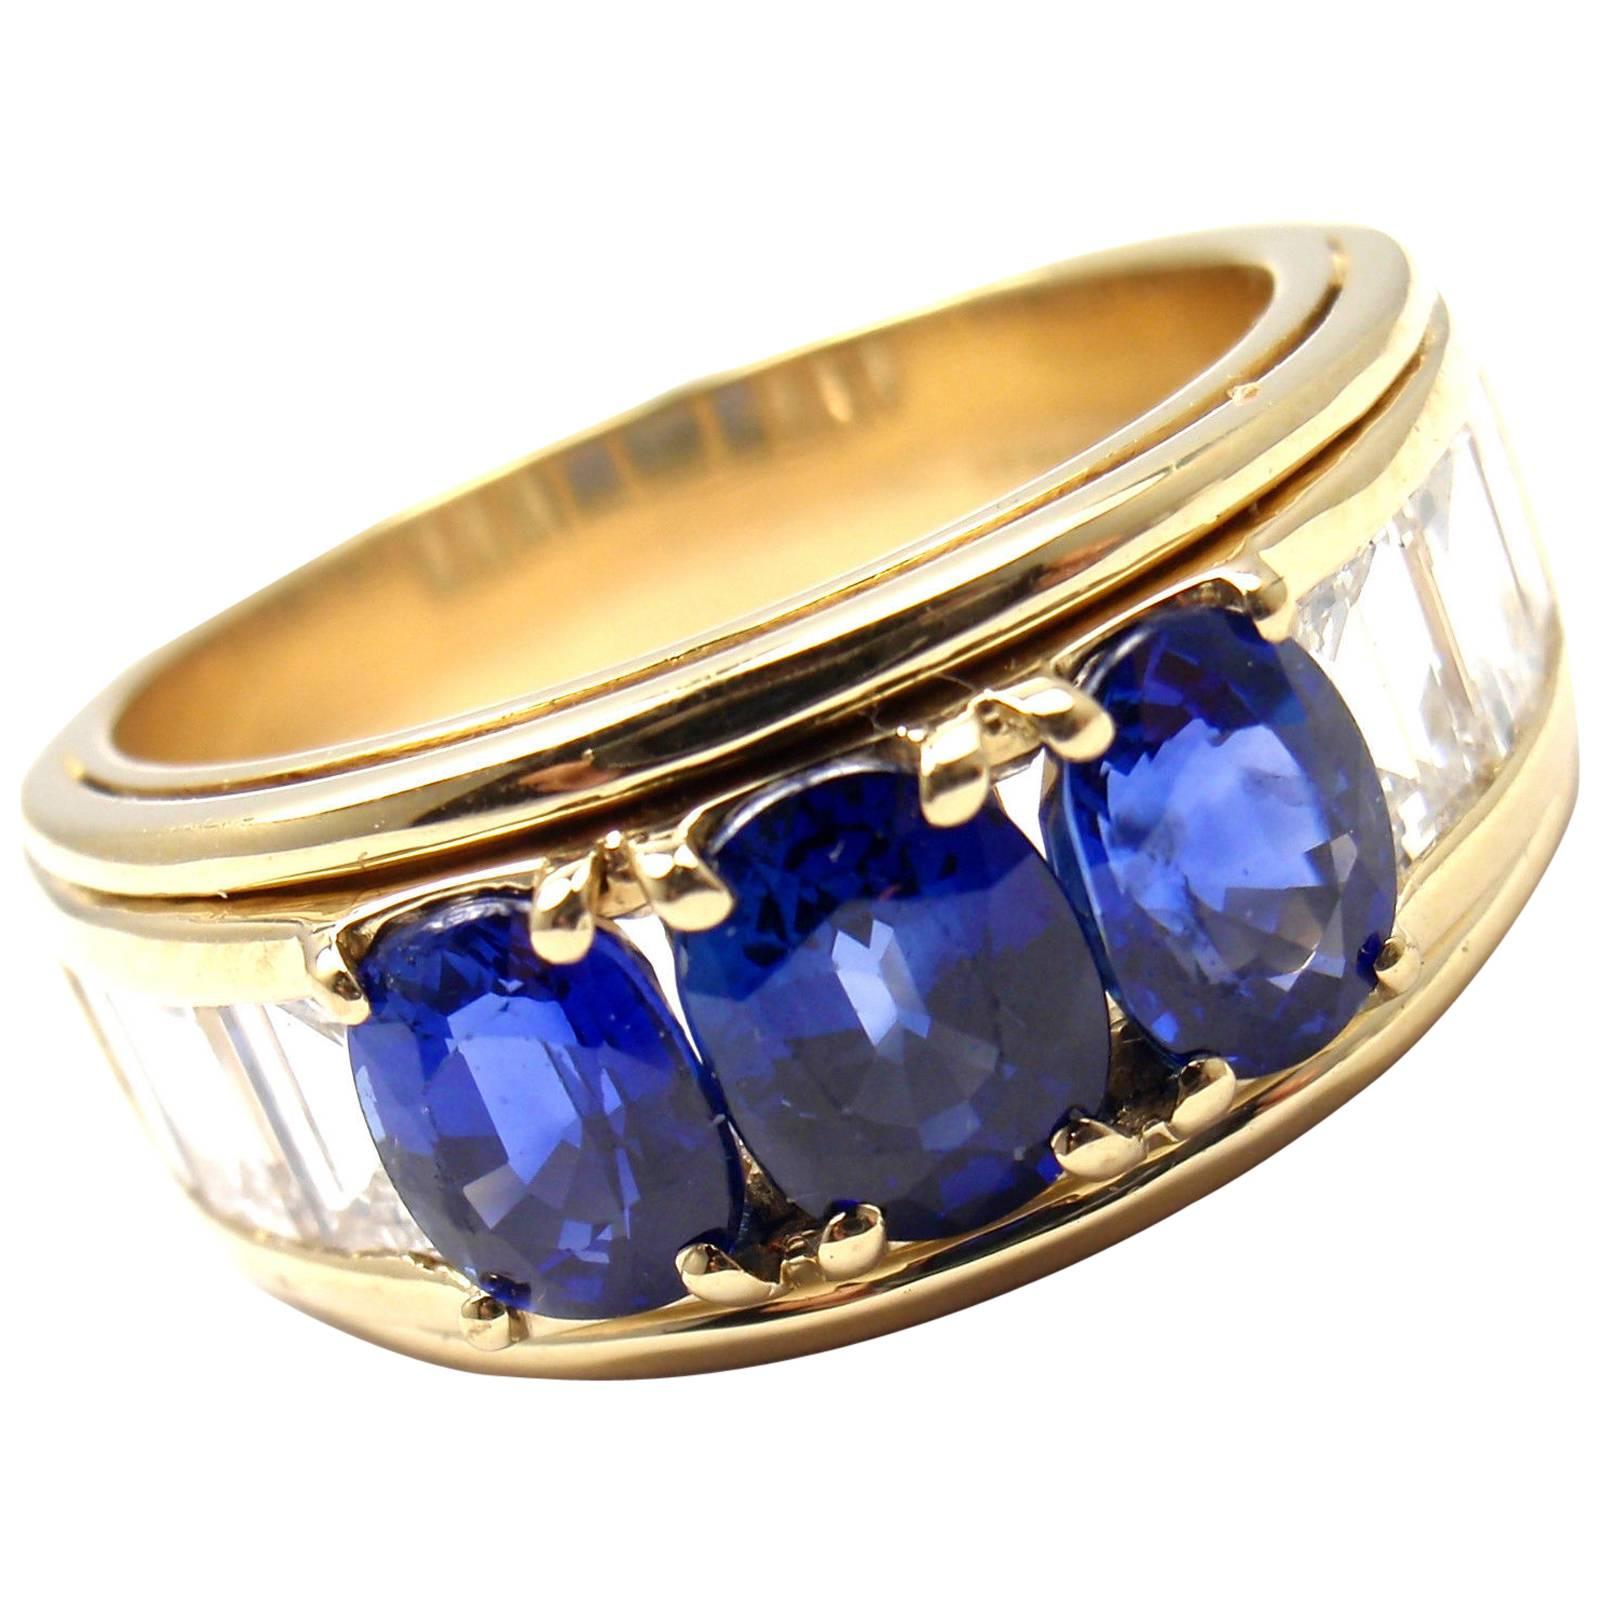 Tiffany & Co. Sapphire Diamond Gold Band Ring